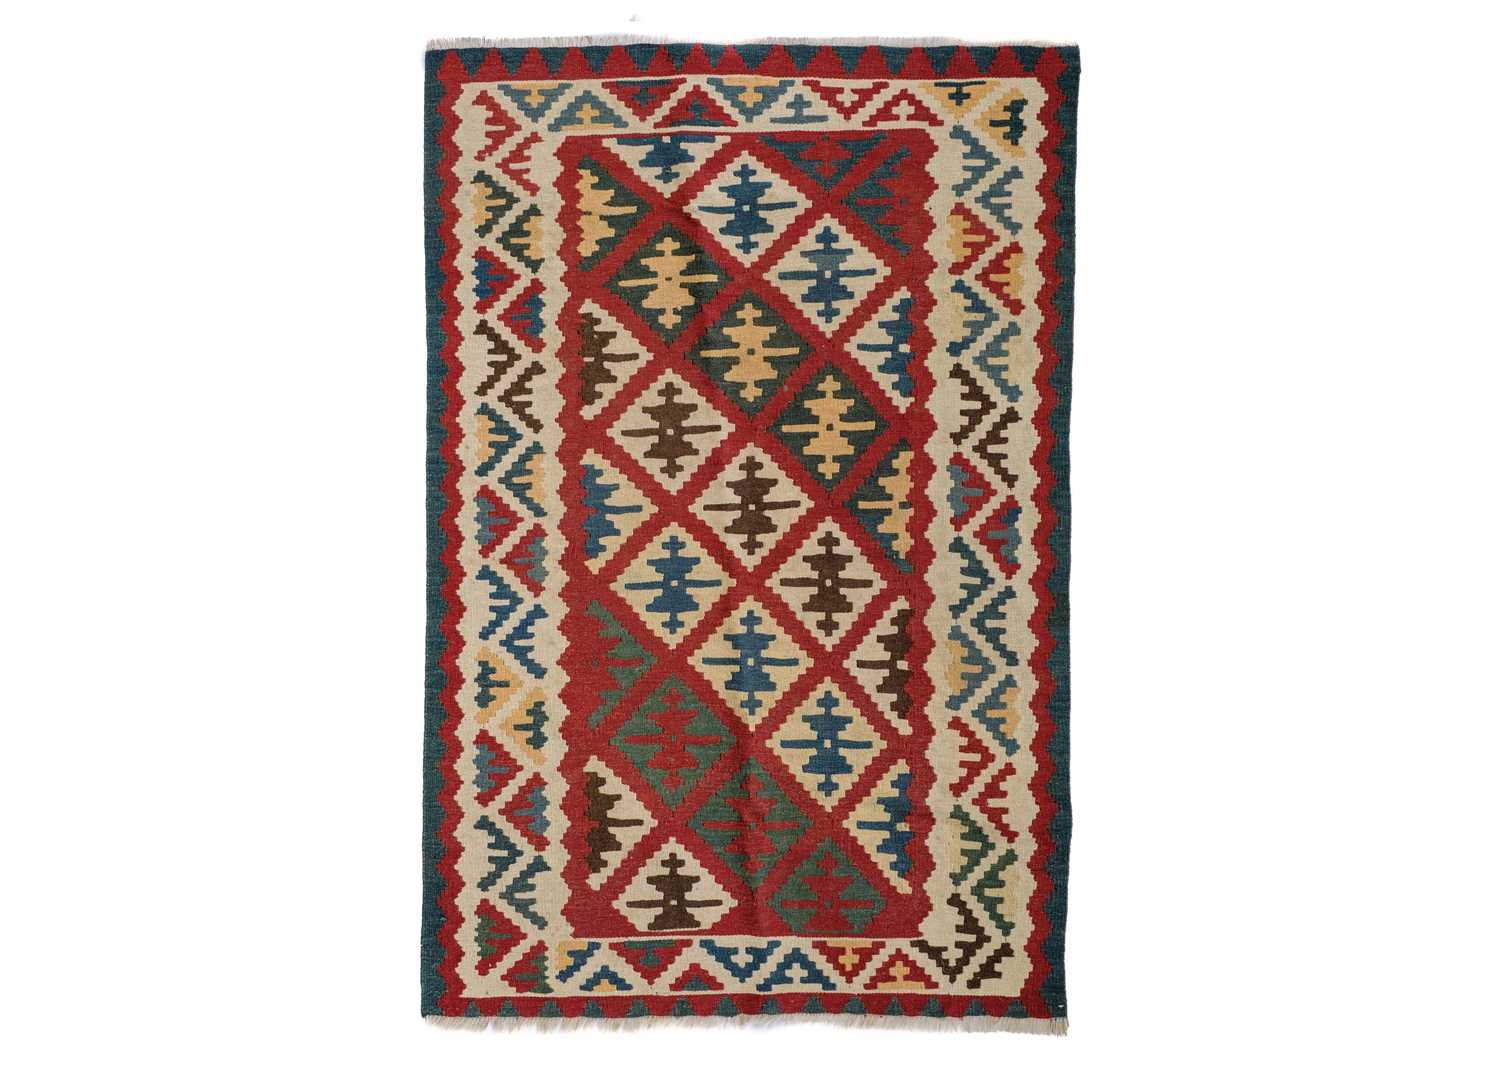 A Persian kelim rug, mid-late 20th century.